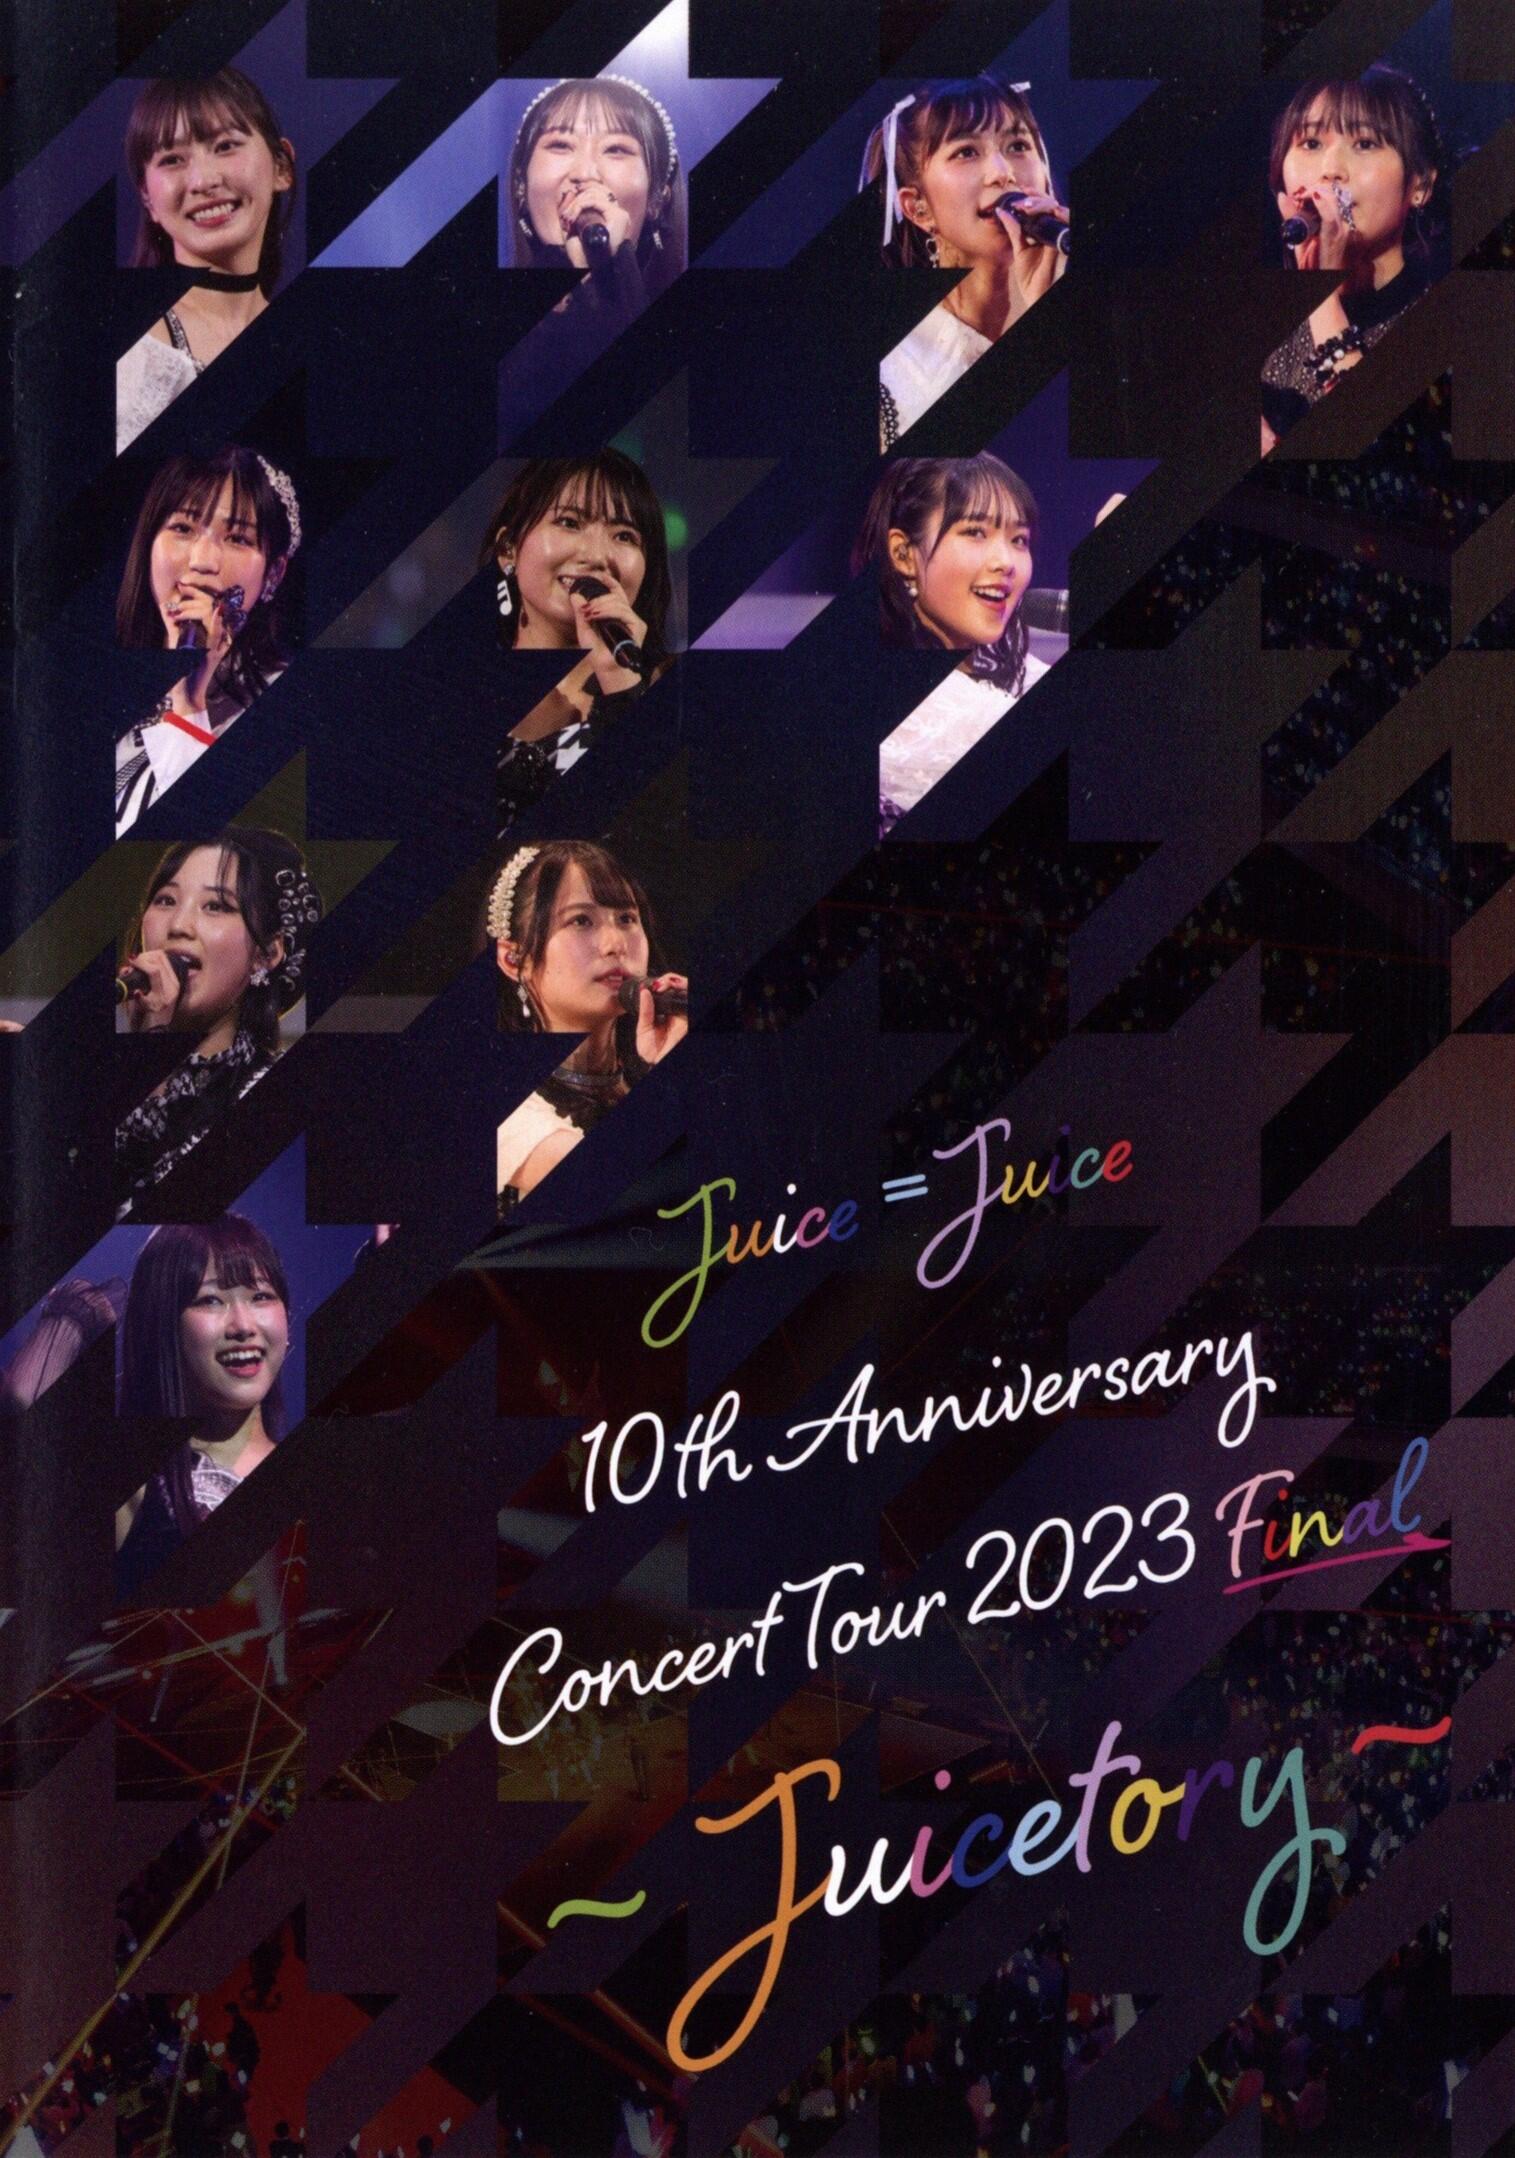 Juice＝Juice 10th Anniversary Concert Tour 2023 Final ～Juicetory～